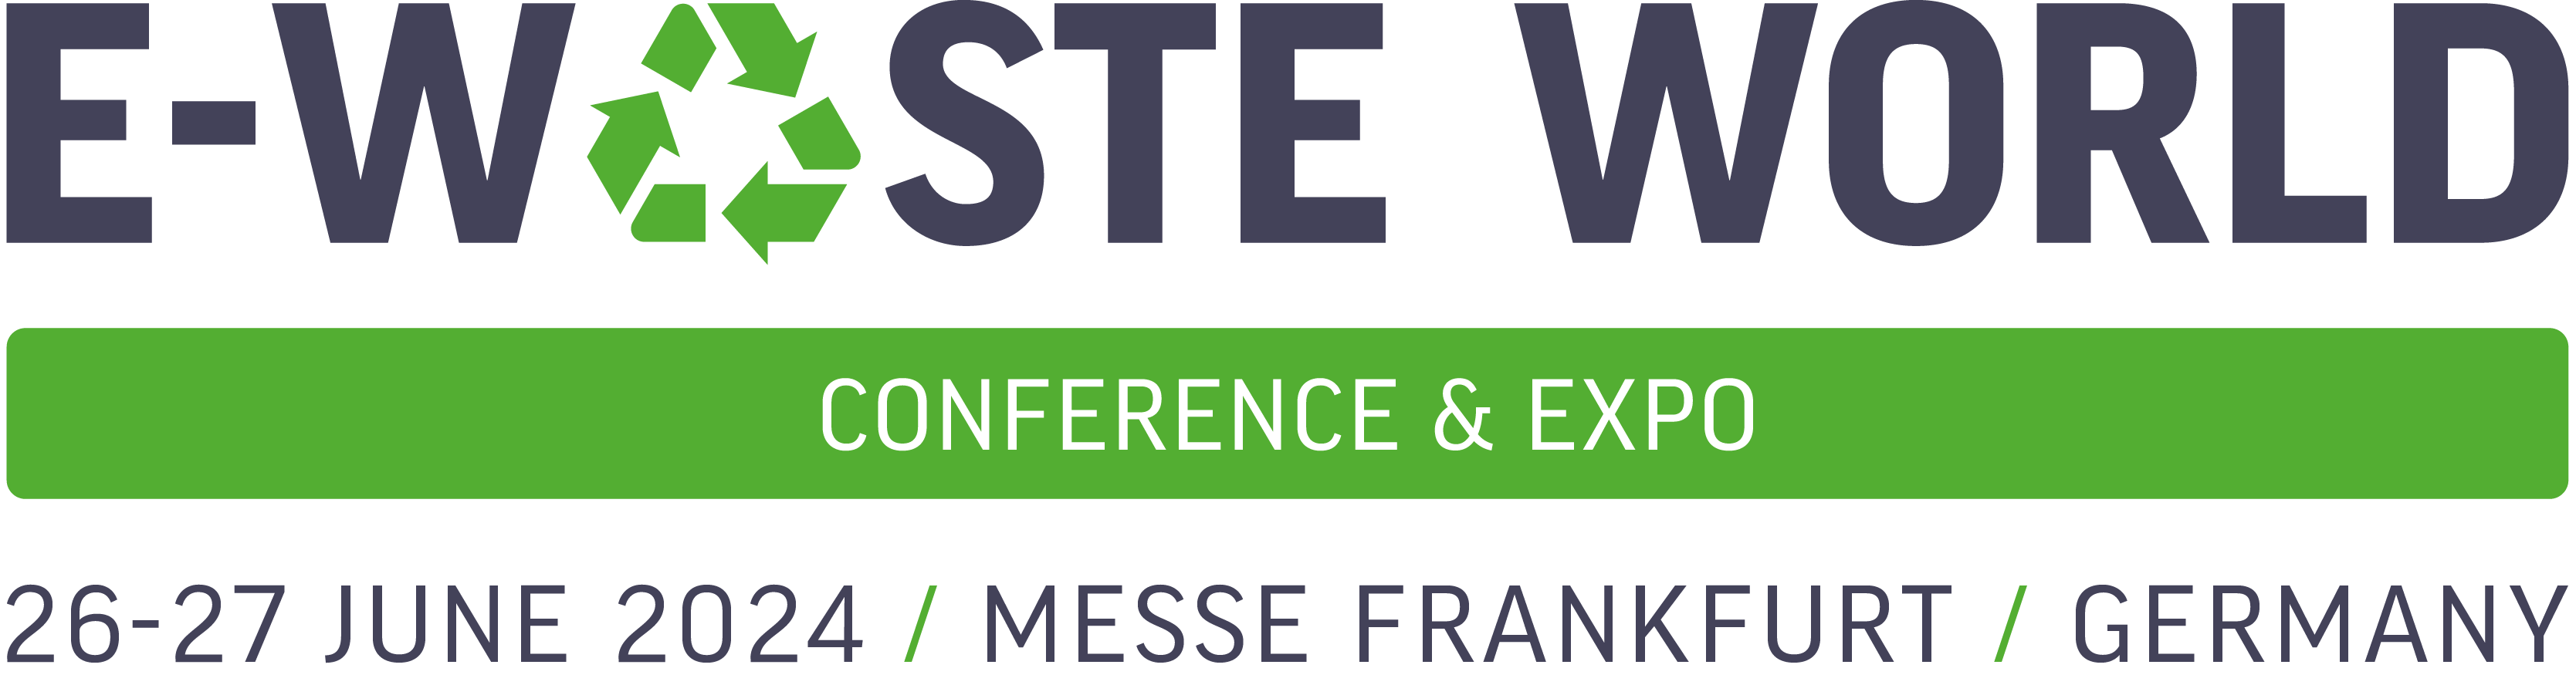 德国法兰克福国际电子回收展览会E-WASTE WORLD CONFERENCE 